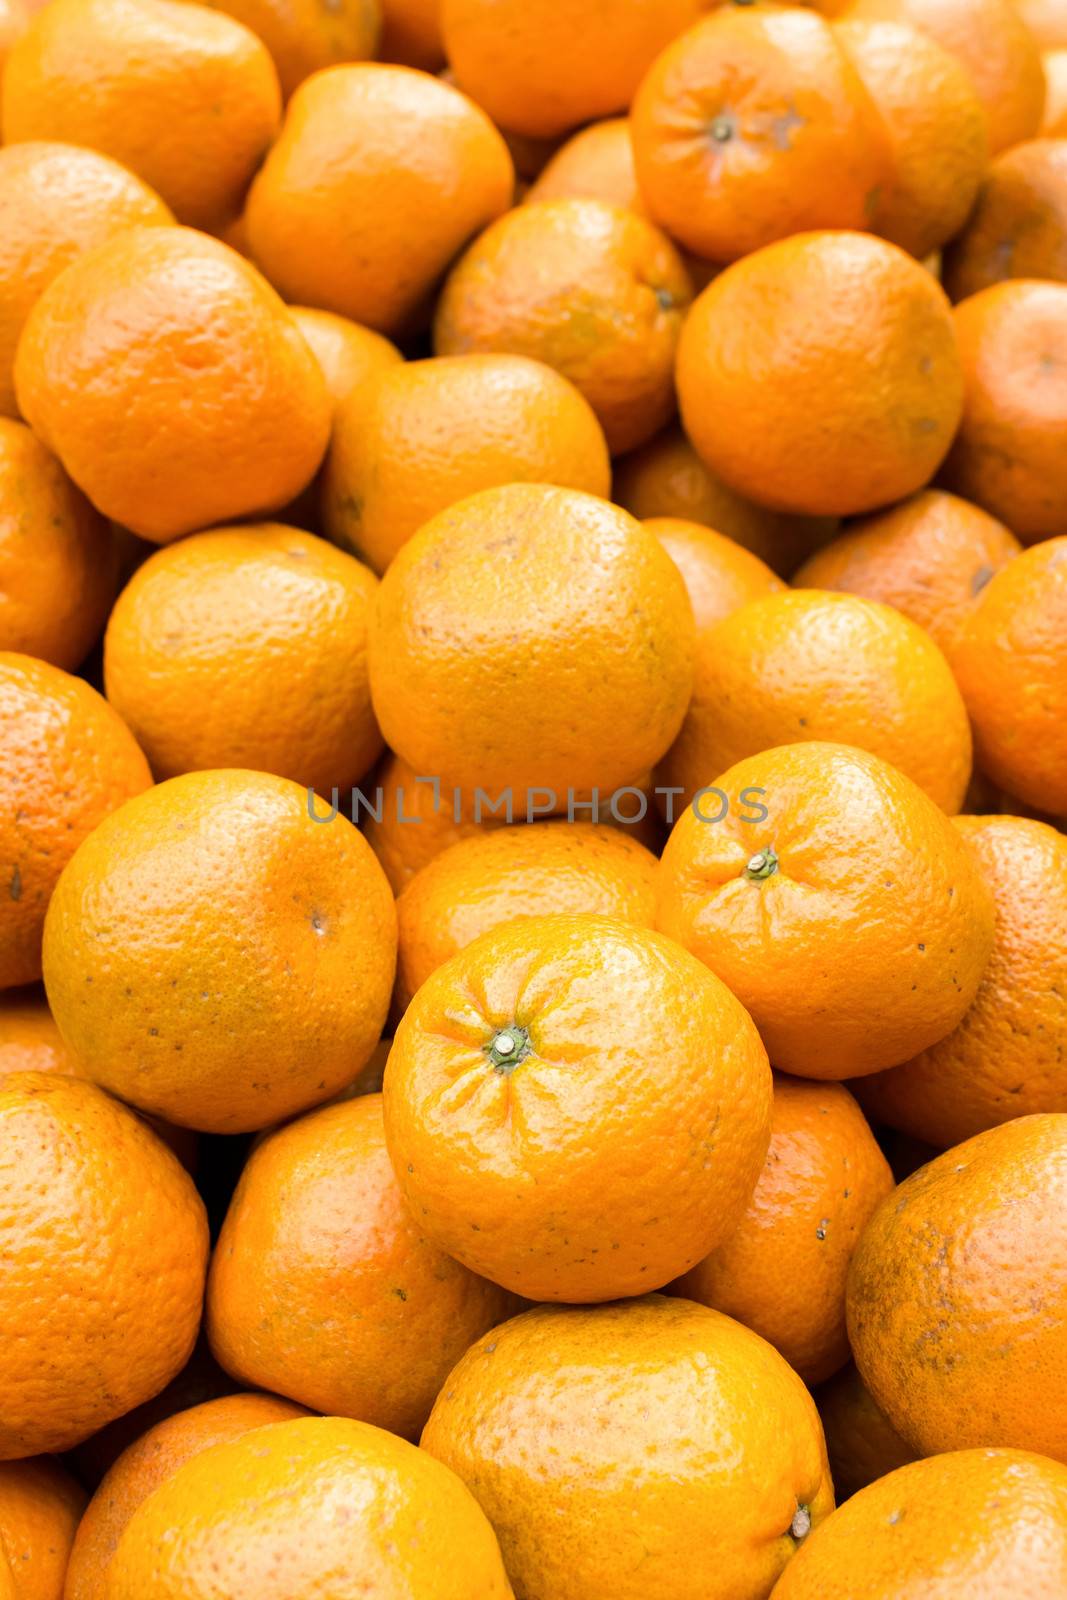 Tangerines in group, fresh fruit in orange color.